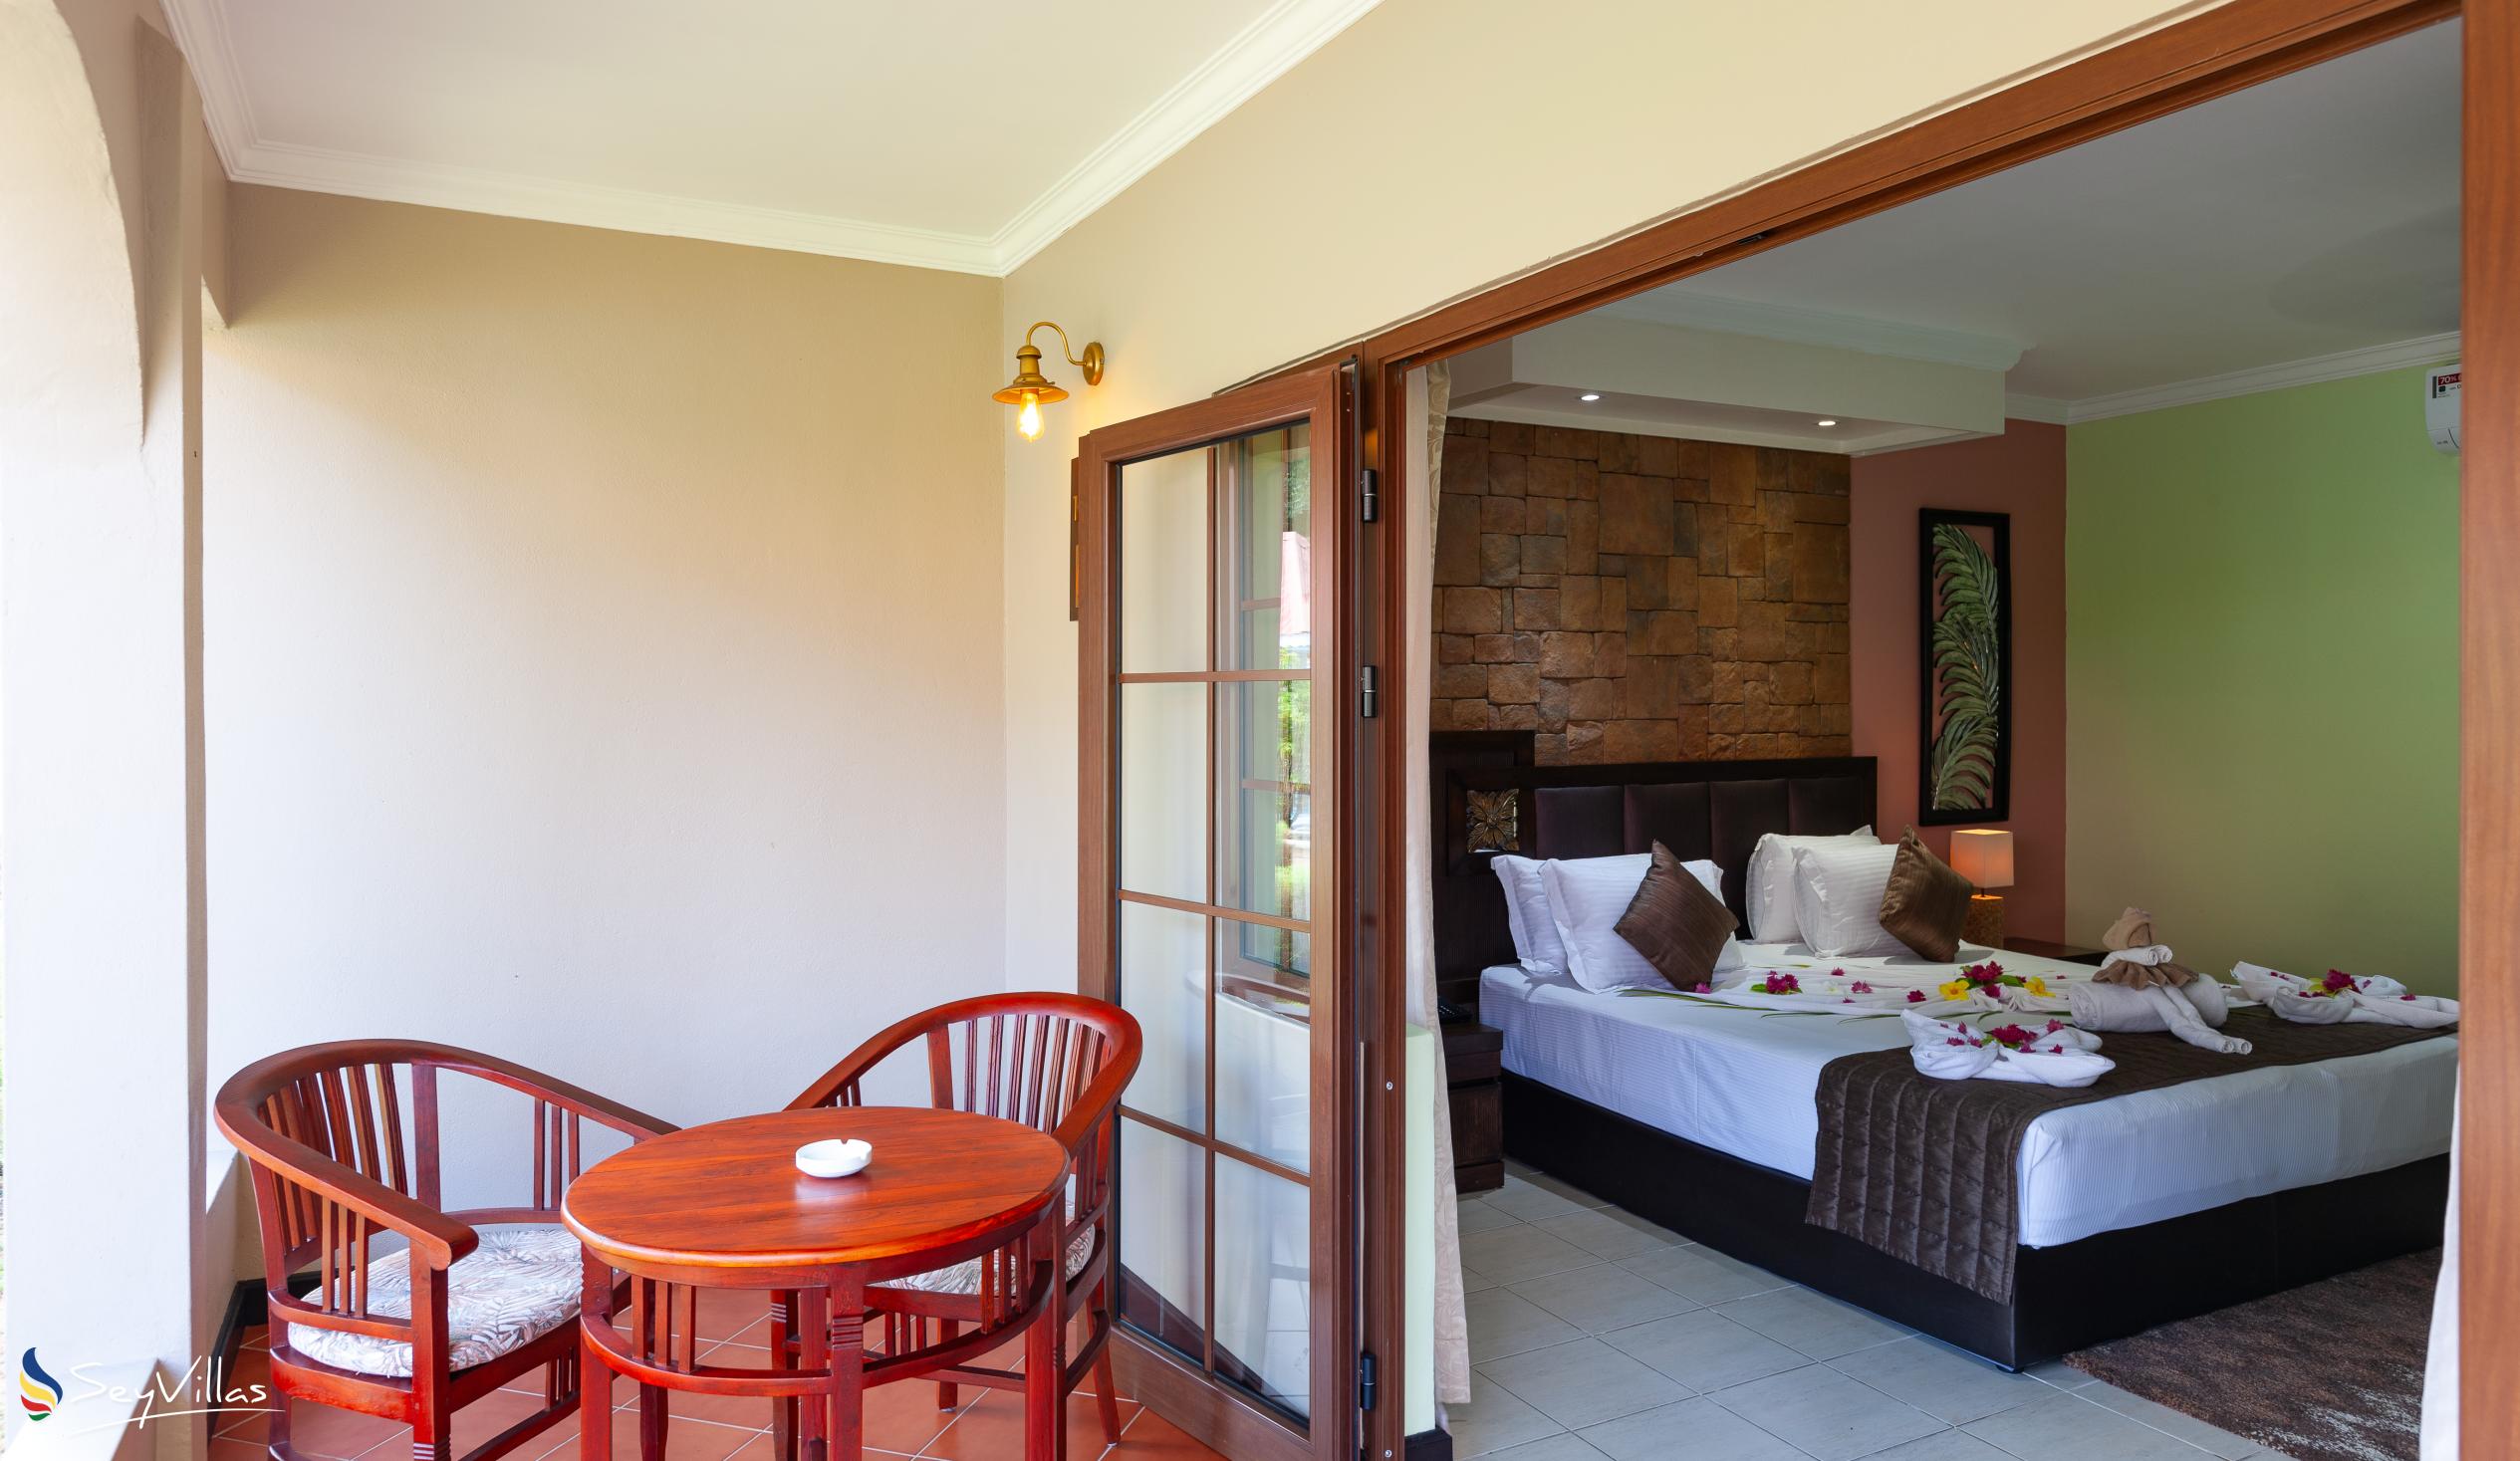 Photo 47: Oasis Hotel, Restaurant & Spa - Superior Room - Praslin (Seychelles)